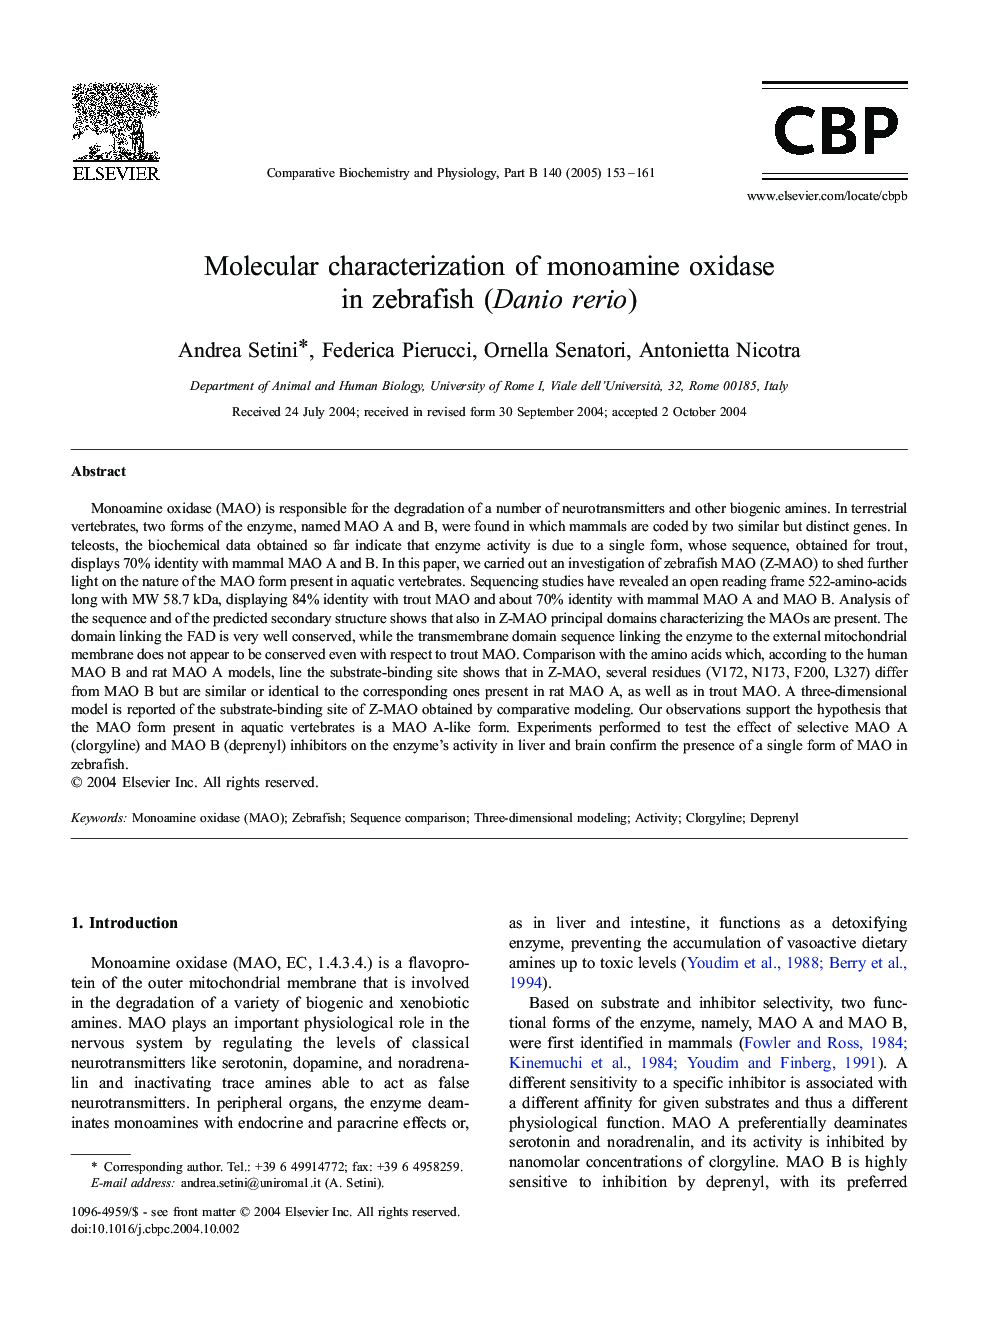 Molecular characterization of monoamine oxidase in zebrafish (Danio rerio)